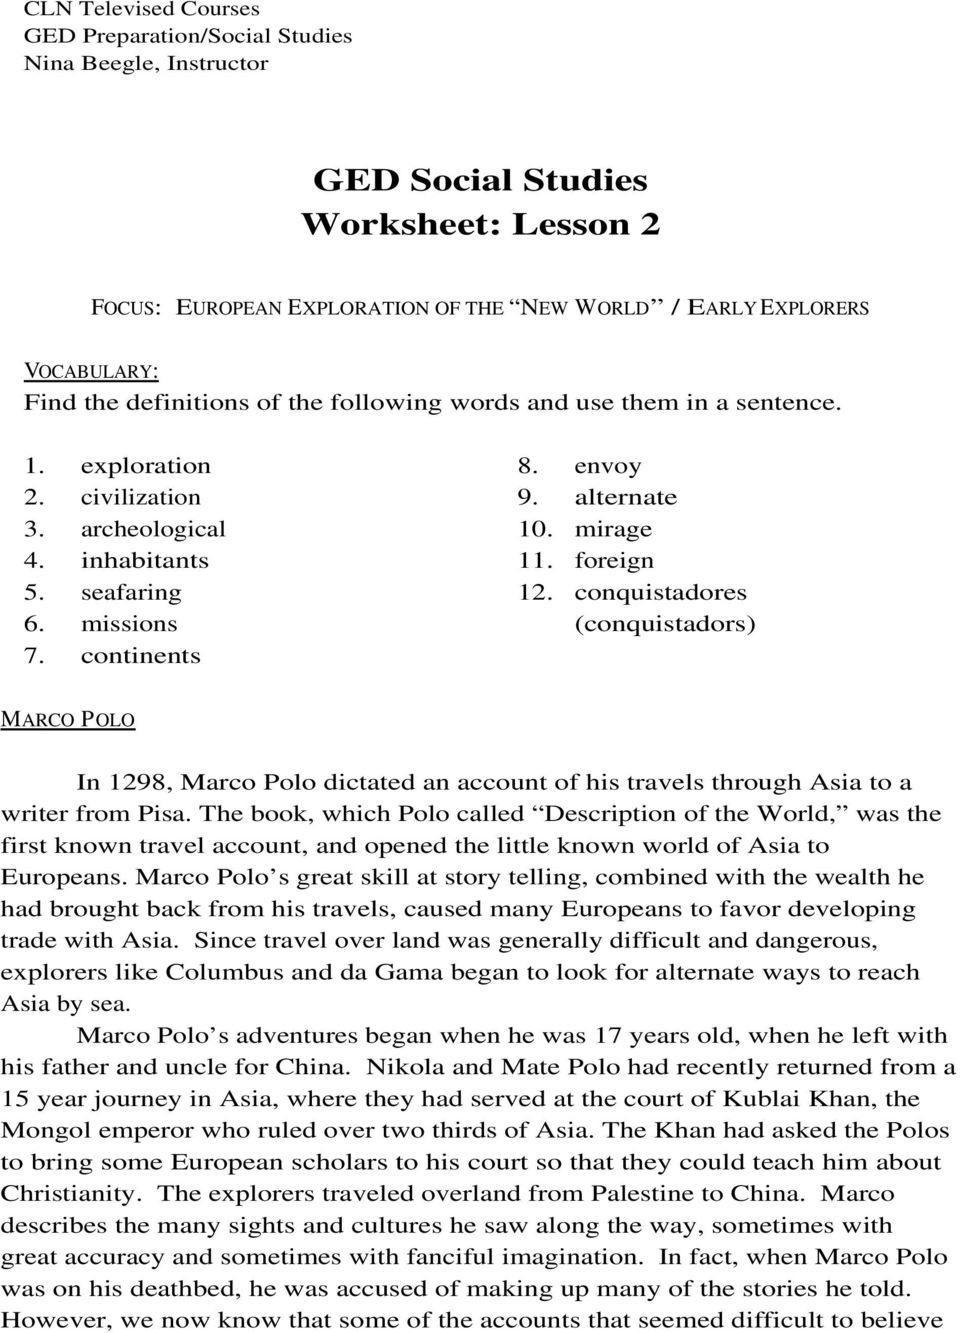 ged social studies worksheet lesson 2 pdf db excelcom